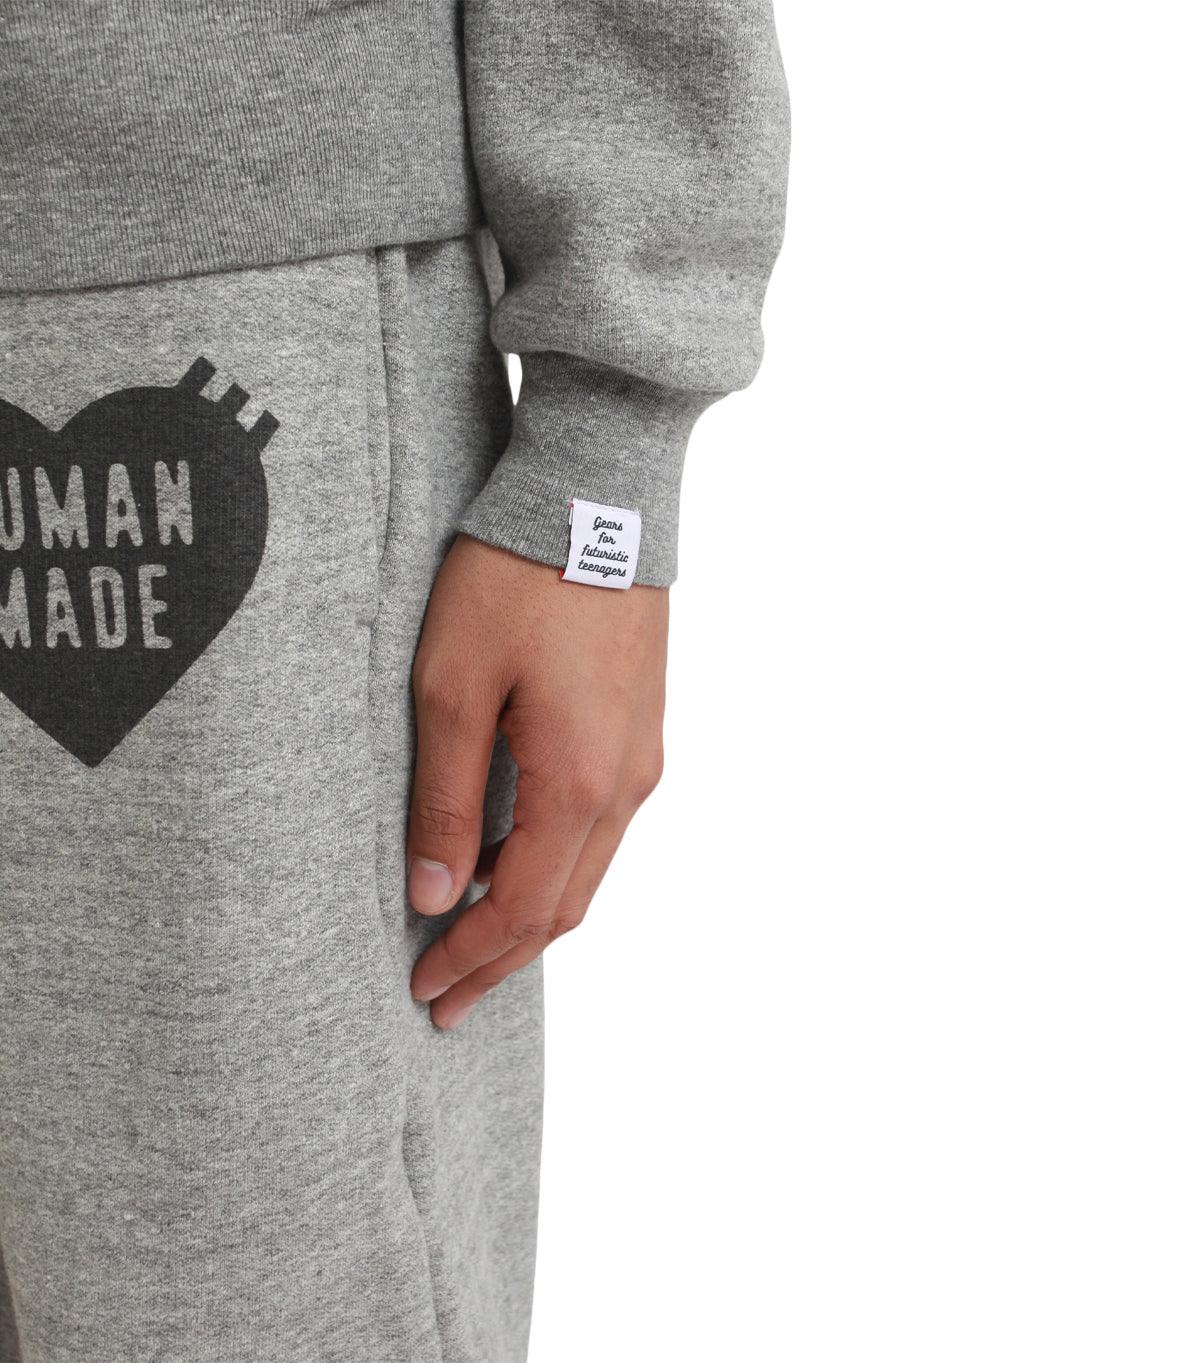 Human Made Sweatshirt Gray